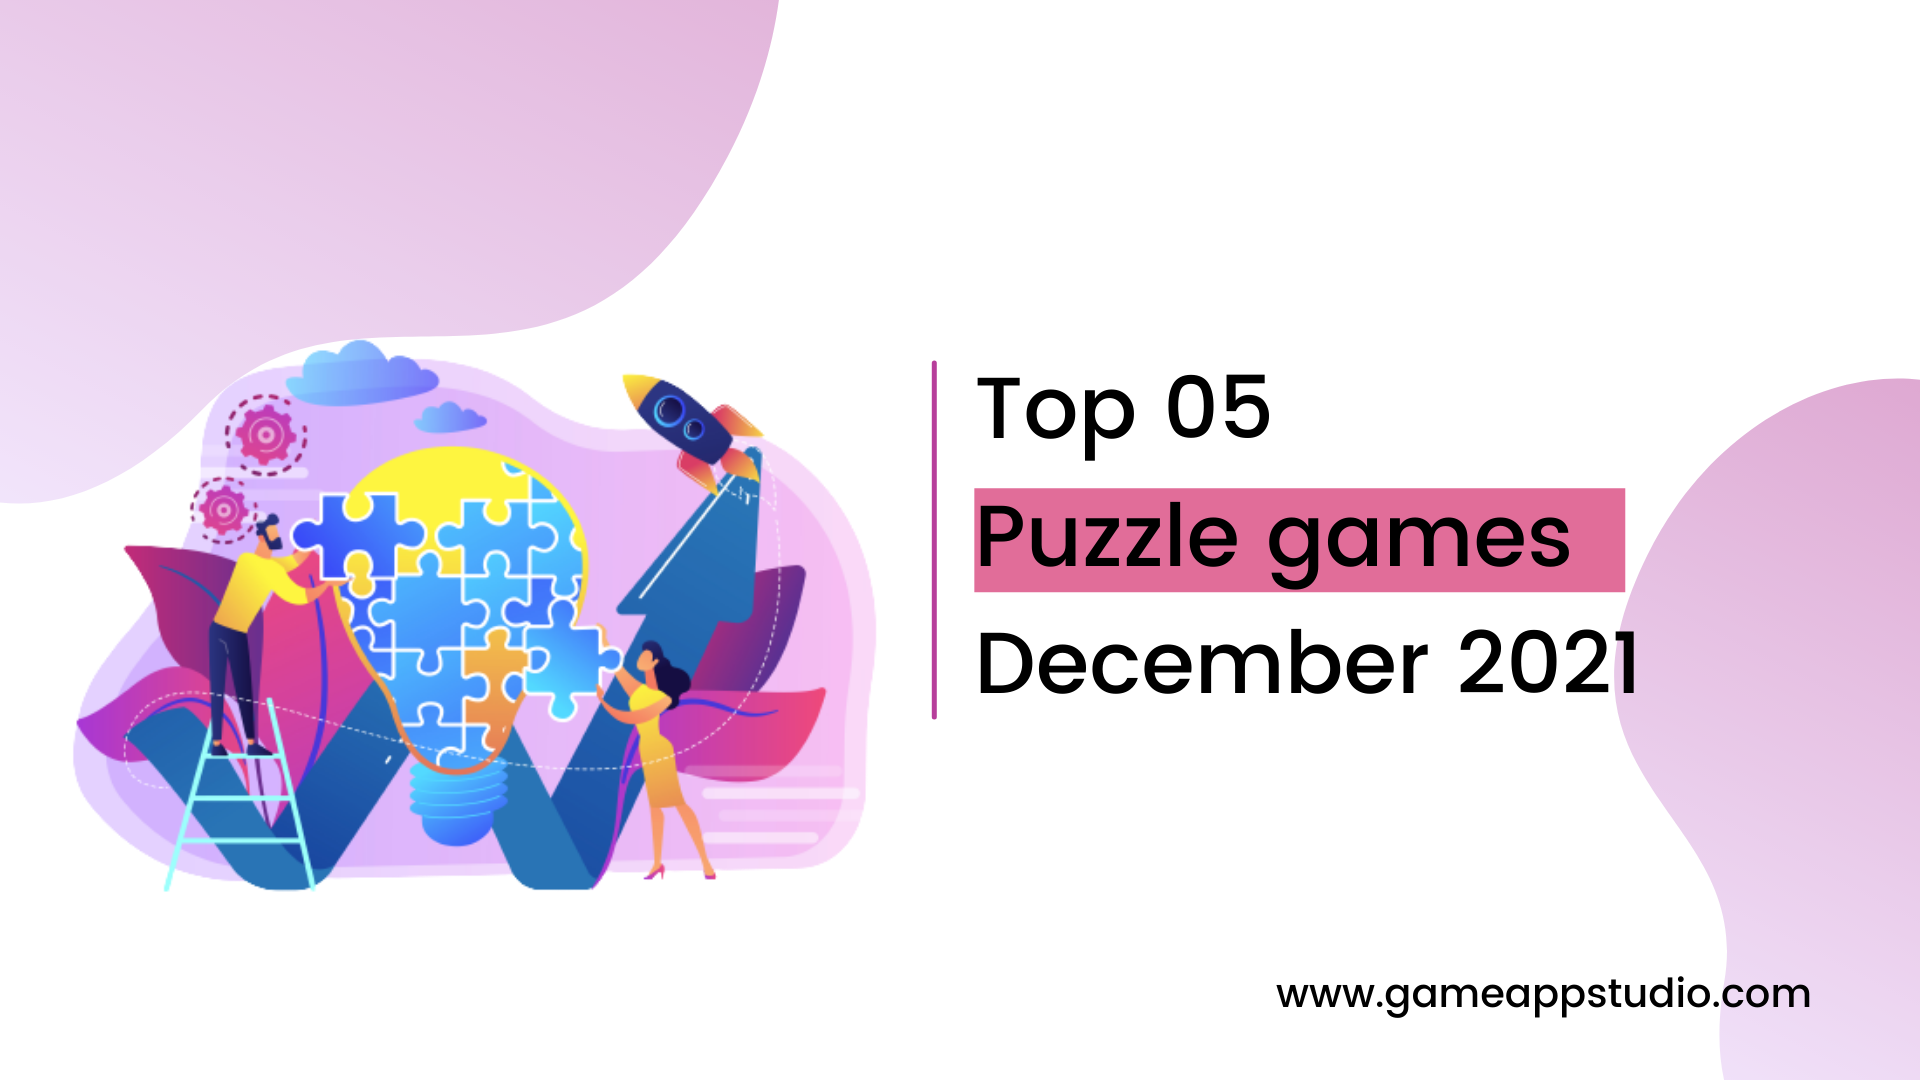 Top 05 Puzzle games of December 2021 (So far till 2021)